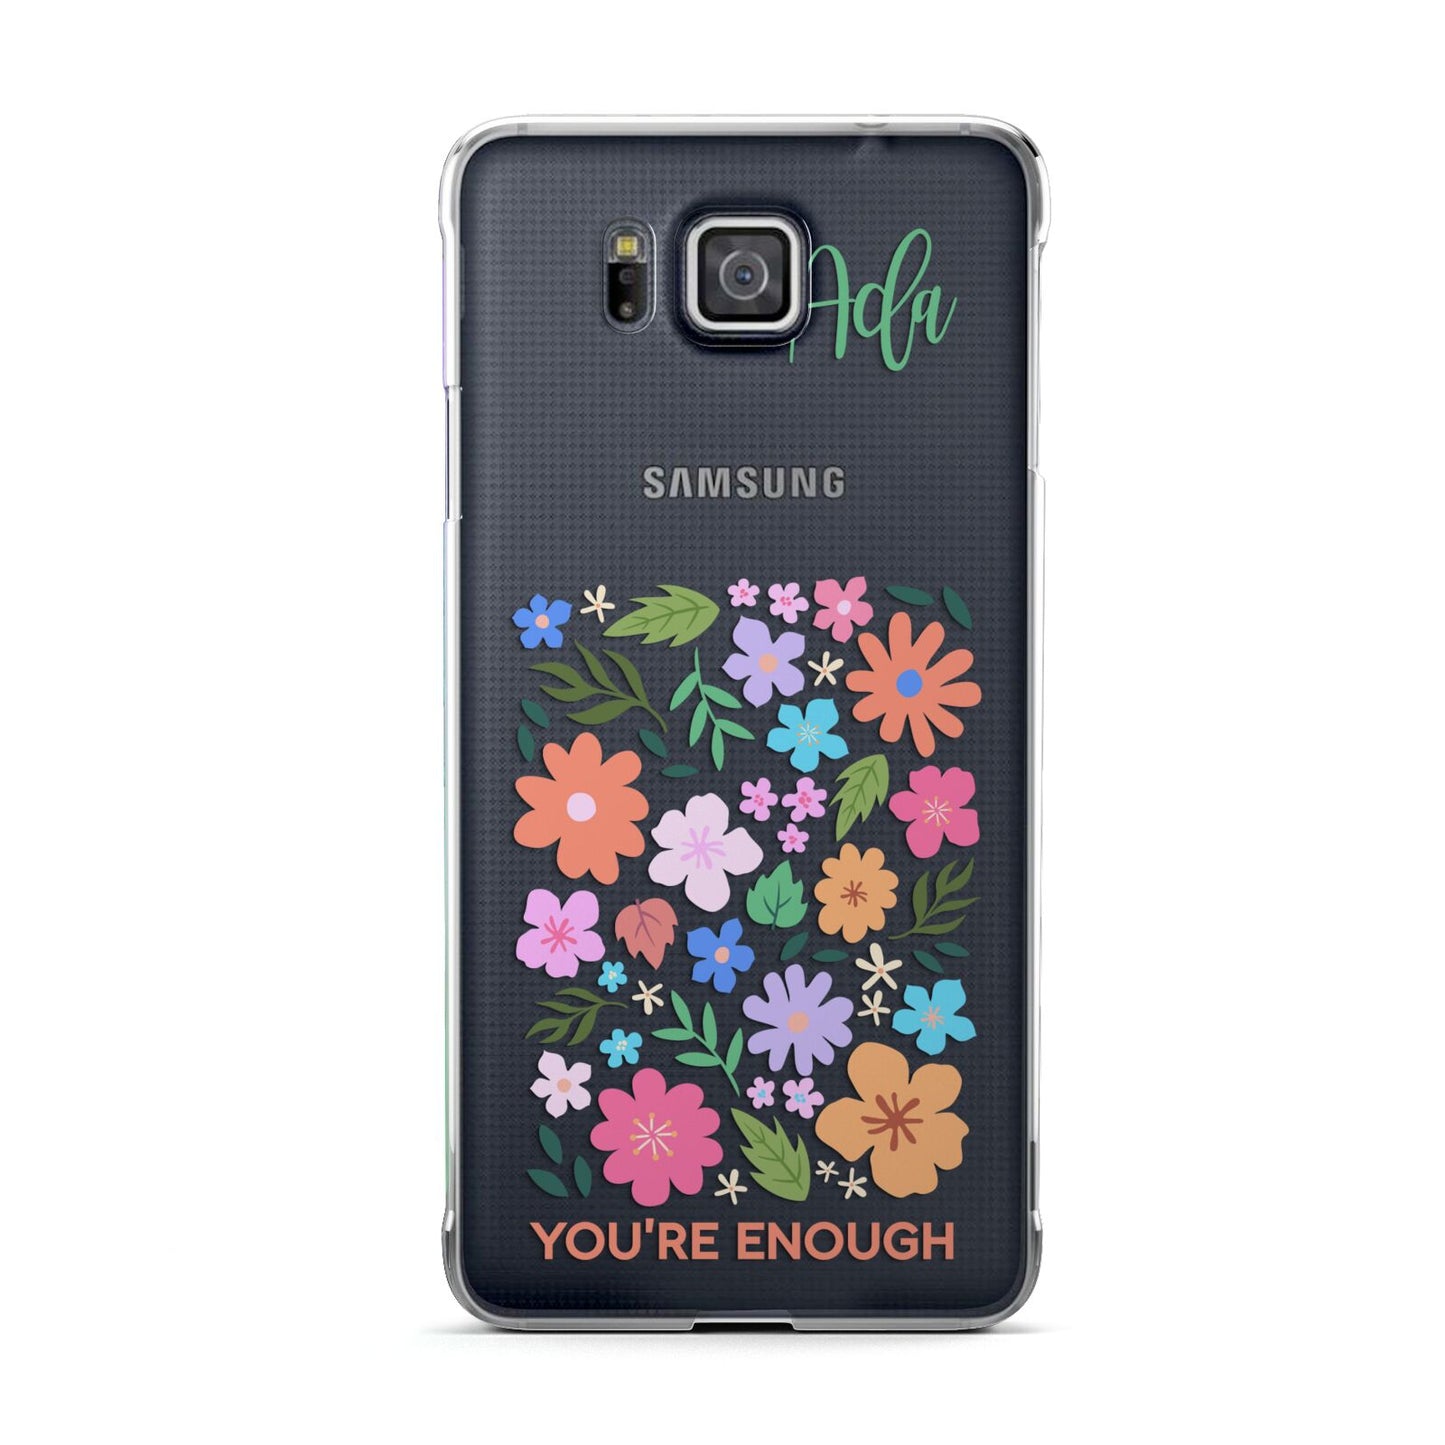 Floral Poster Samsung Galaxy Alpha Case